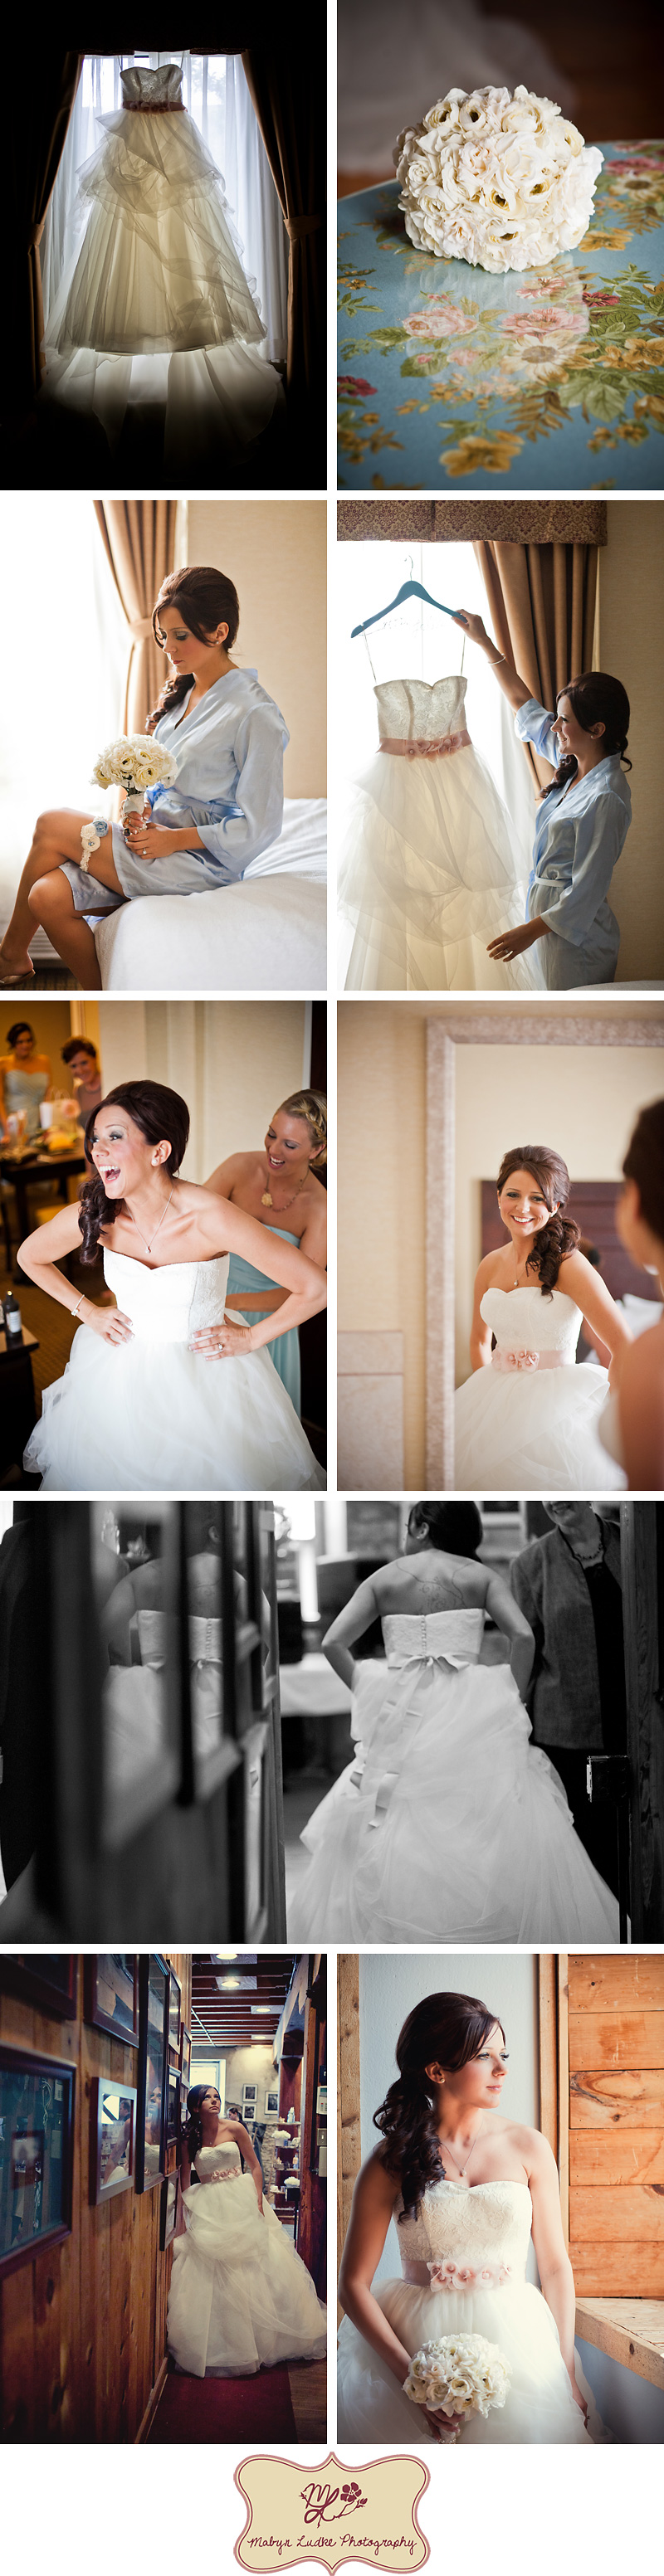 Jena & Ben's Wedding Honeoye Falls NY Mabyn Ludke Photography